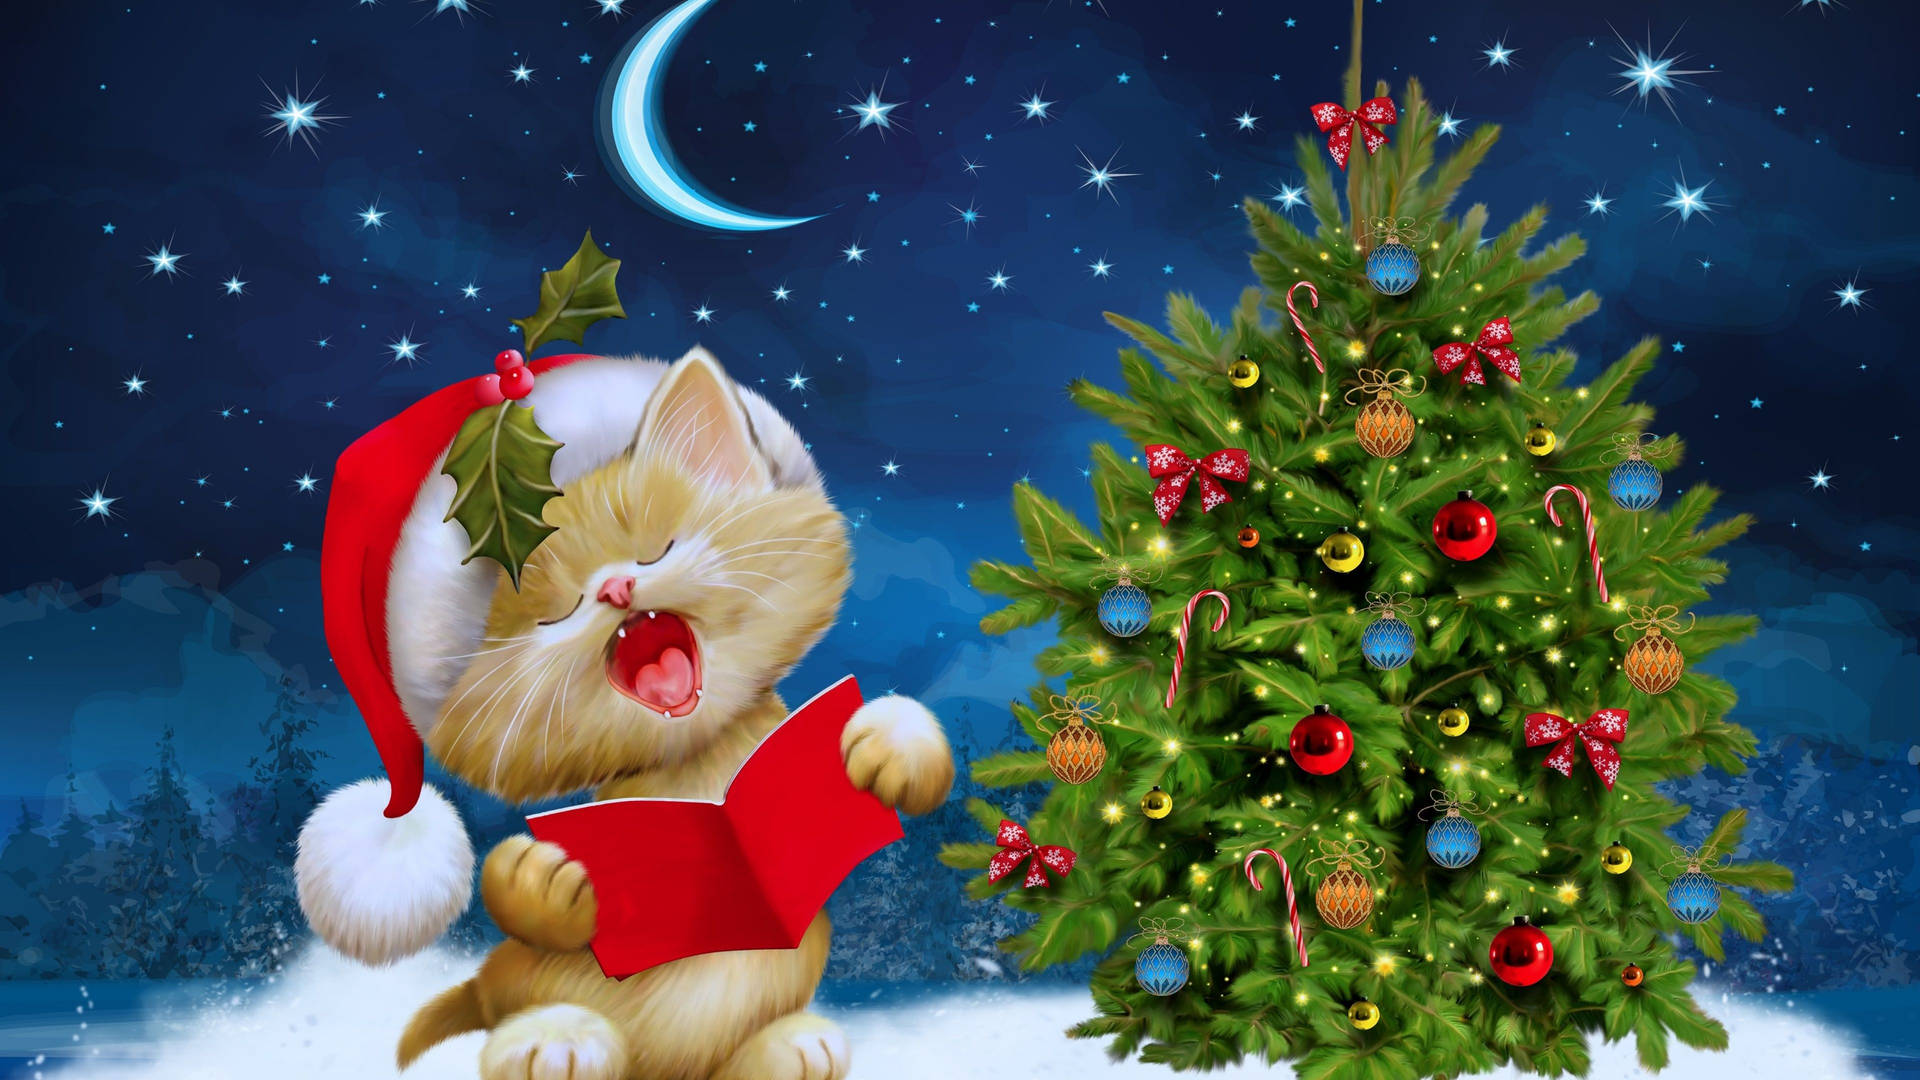 Adorable Kitten In A Festive Santa Hat Celebrating Christmas In 4k Ultra Hd. Background